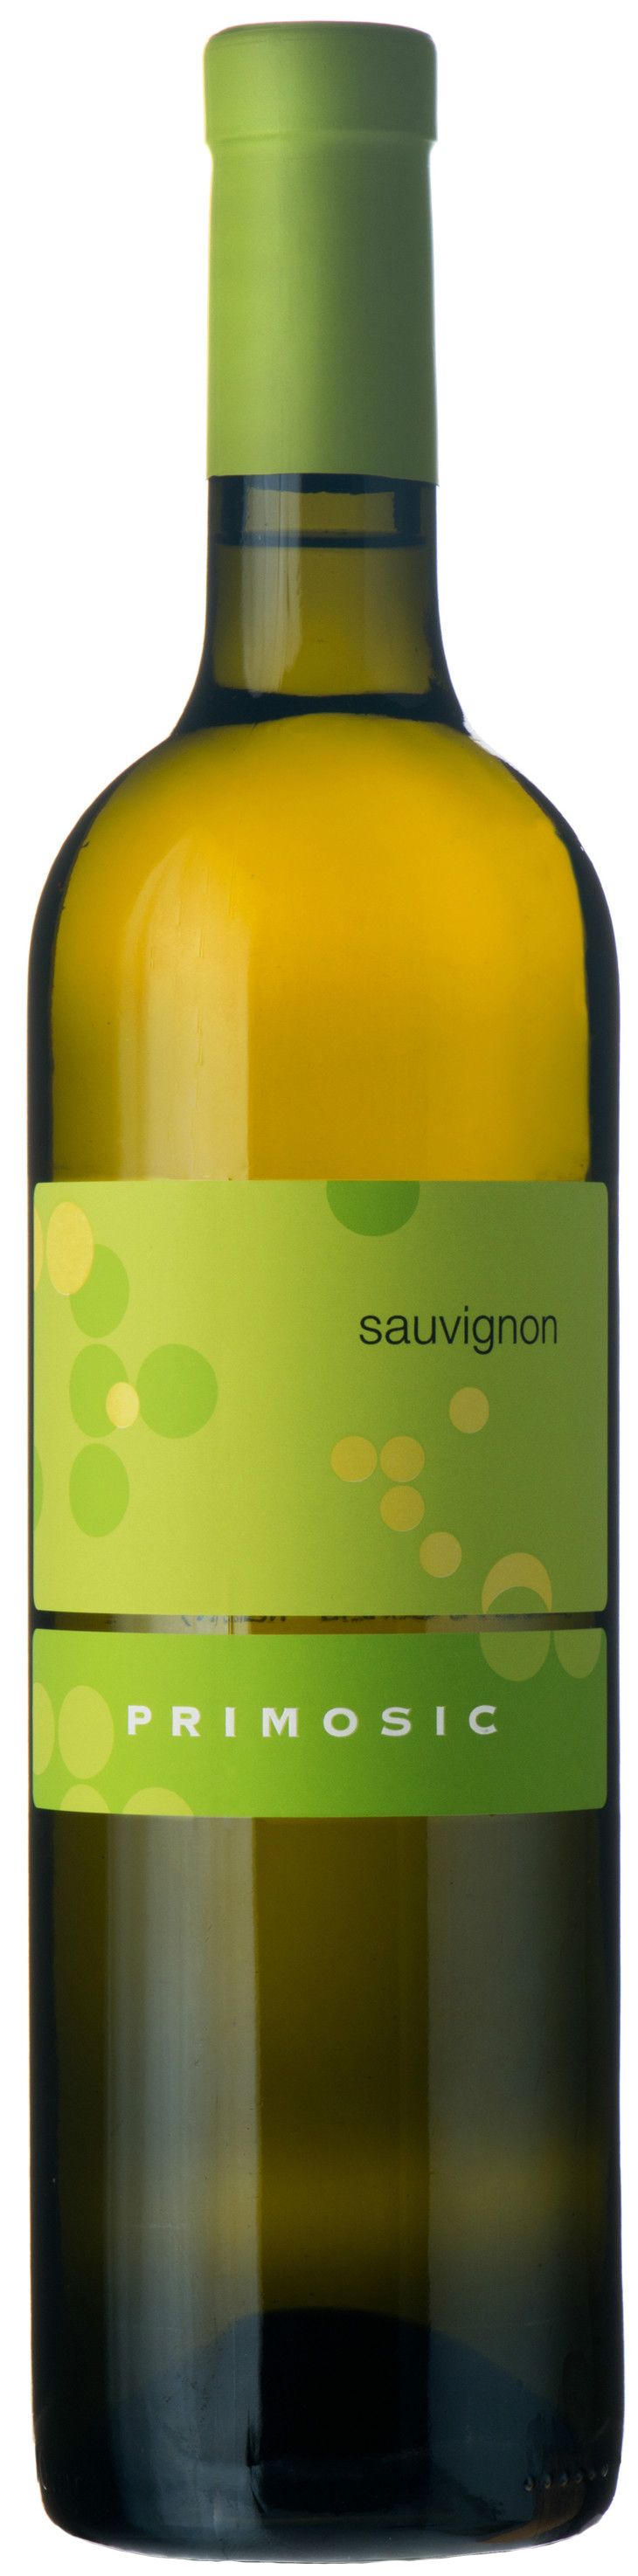 Primosic, Sauvignon Blanc, 2013